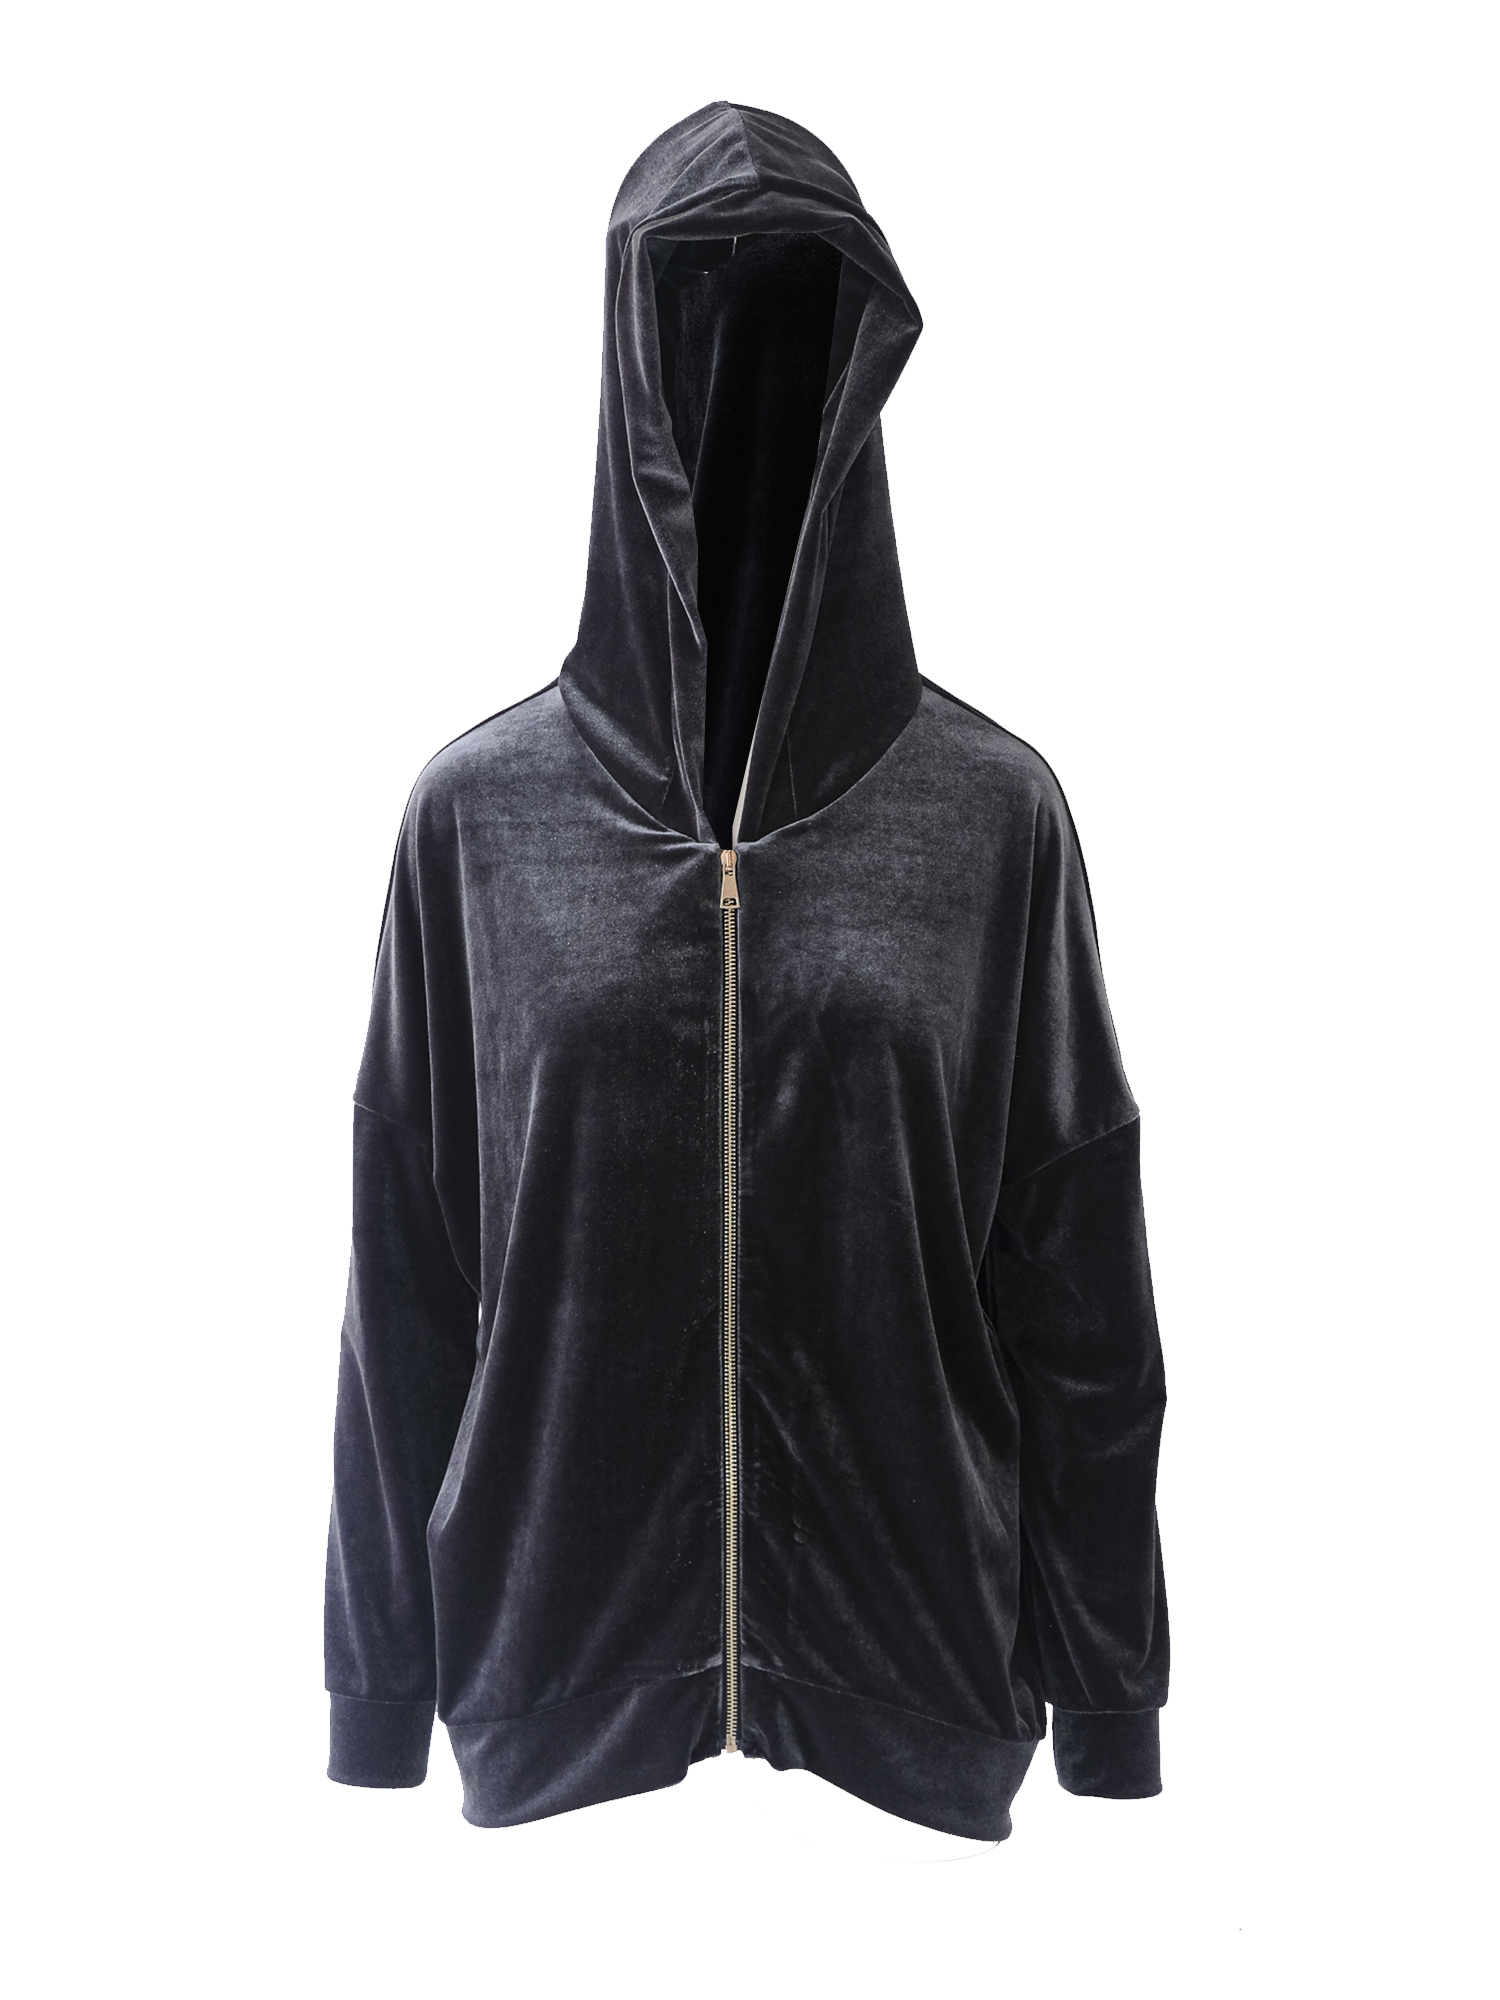 ADRIEN - hoodie with zip in grey chenille